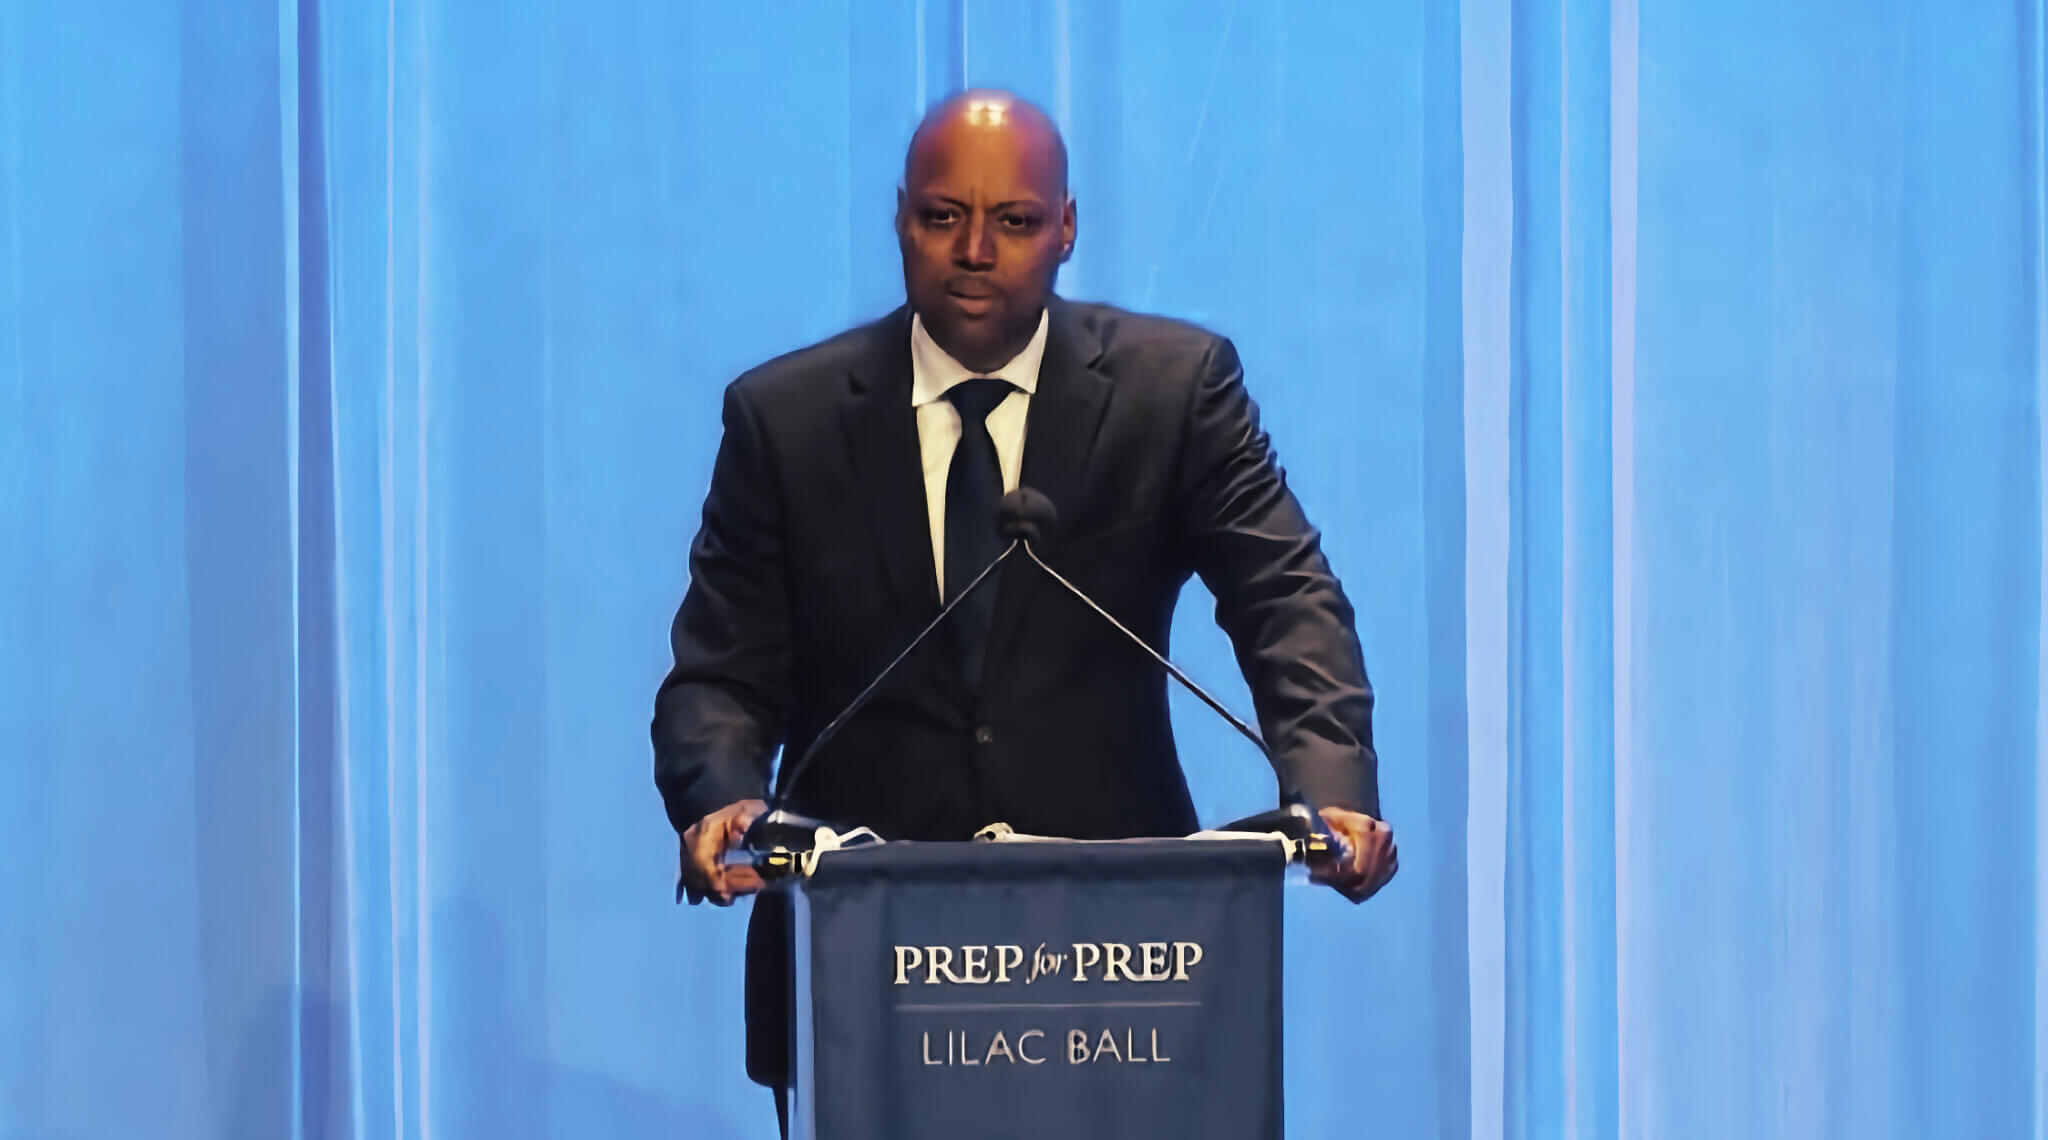 Prep For Prep Lilac Ball celebrates leadership Caribbean Life